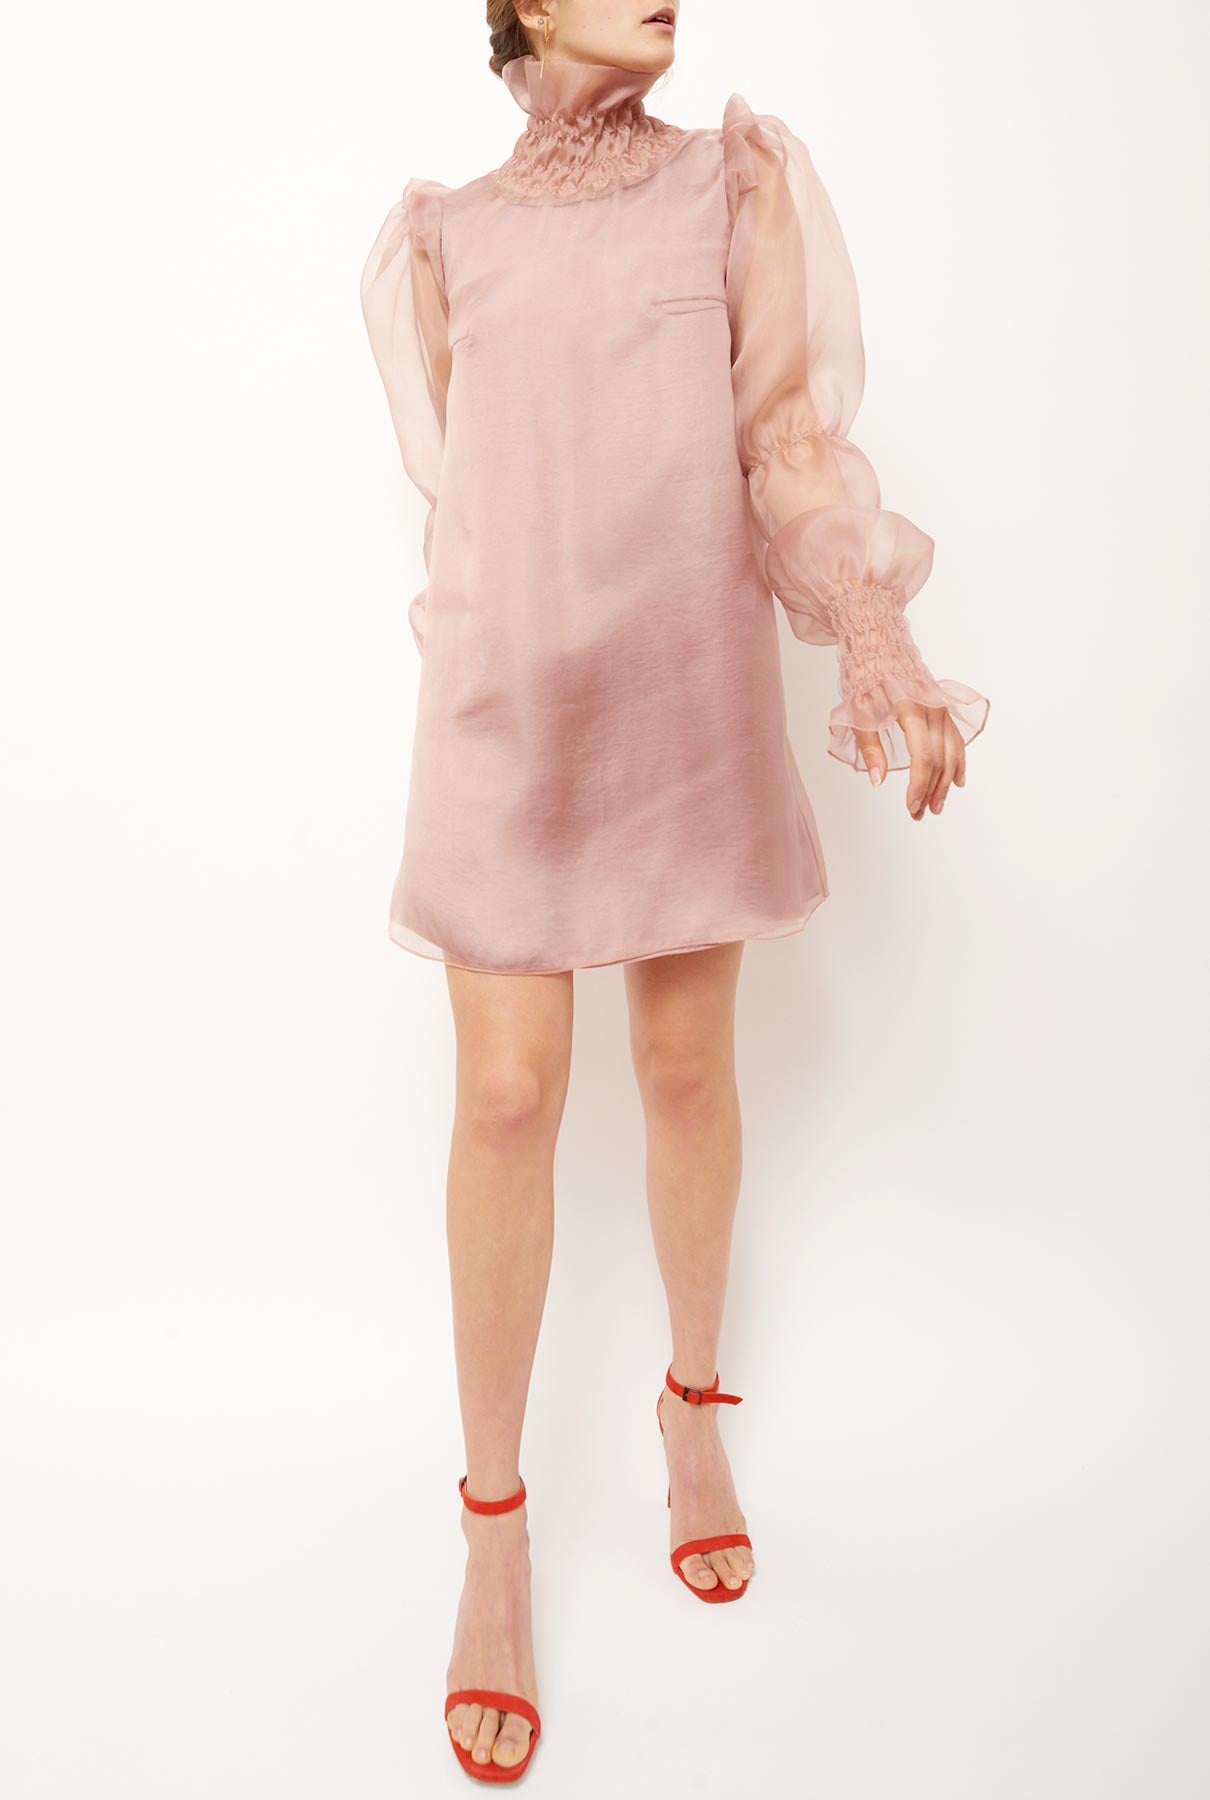 Andrea organza pink mini dress - Pre Order Dress Diddo Madrid 